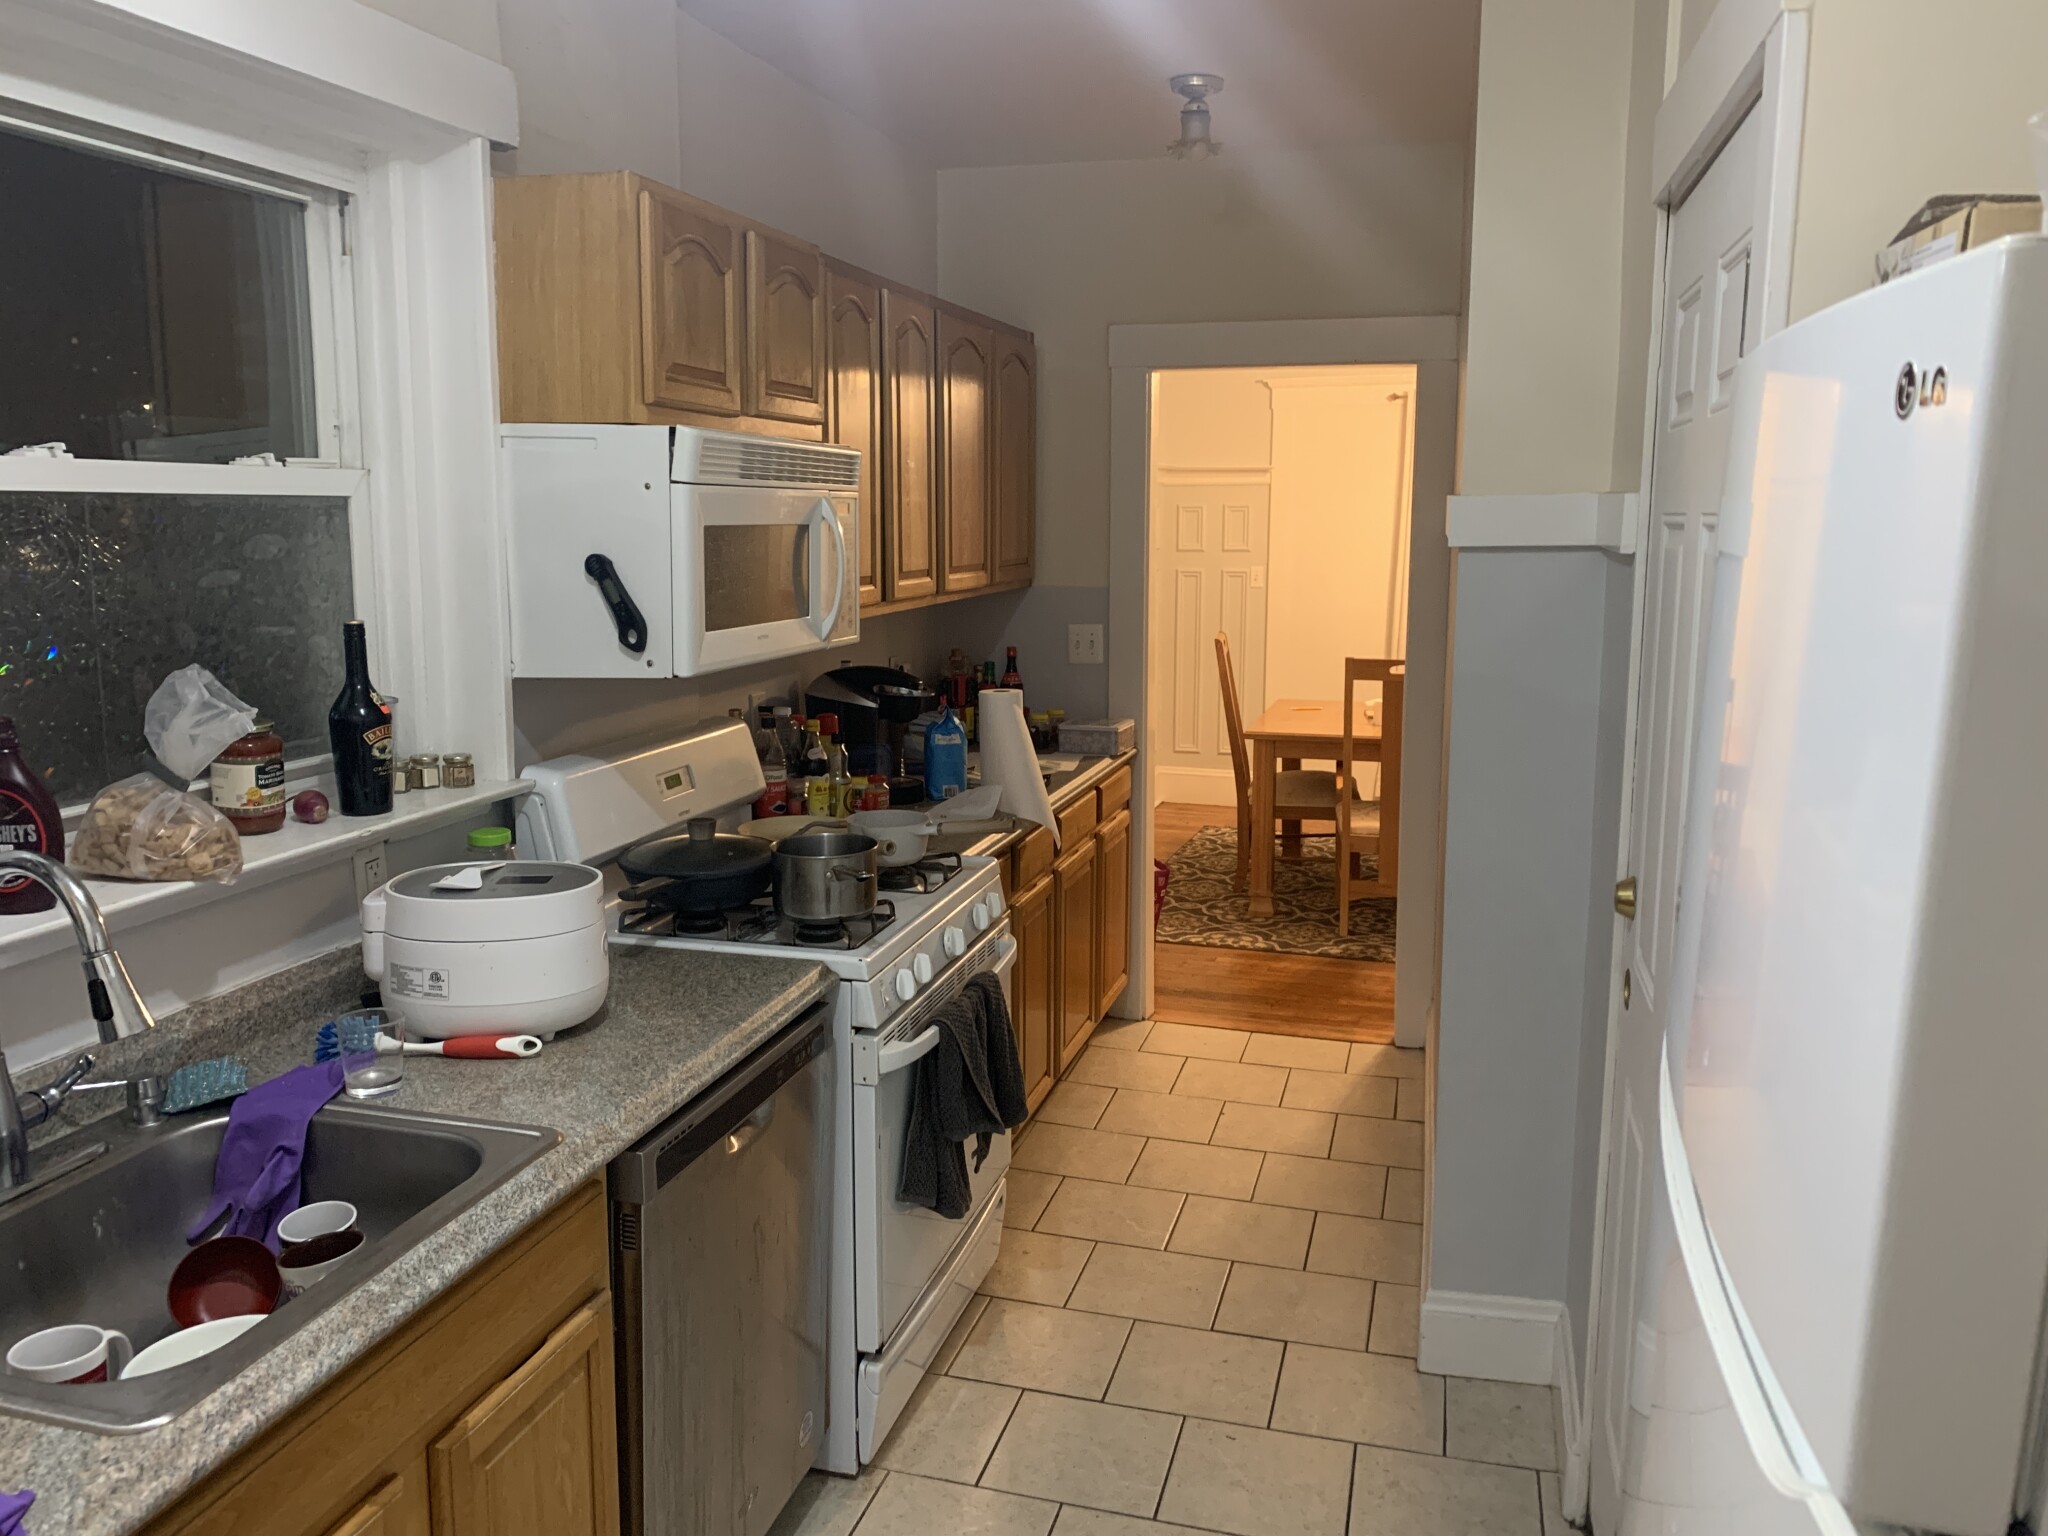 Photos of apartment on Undine Rd.,Boston MA 02135